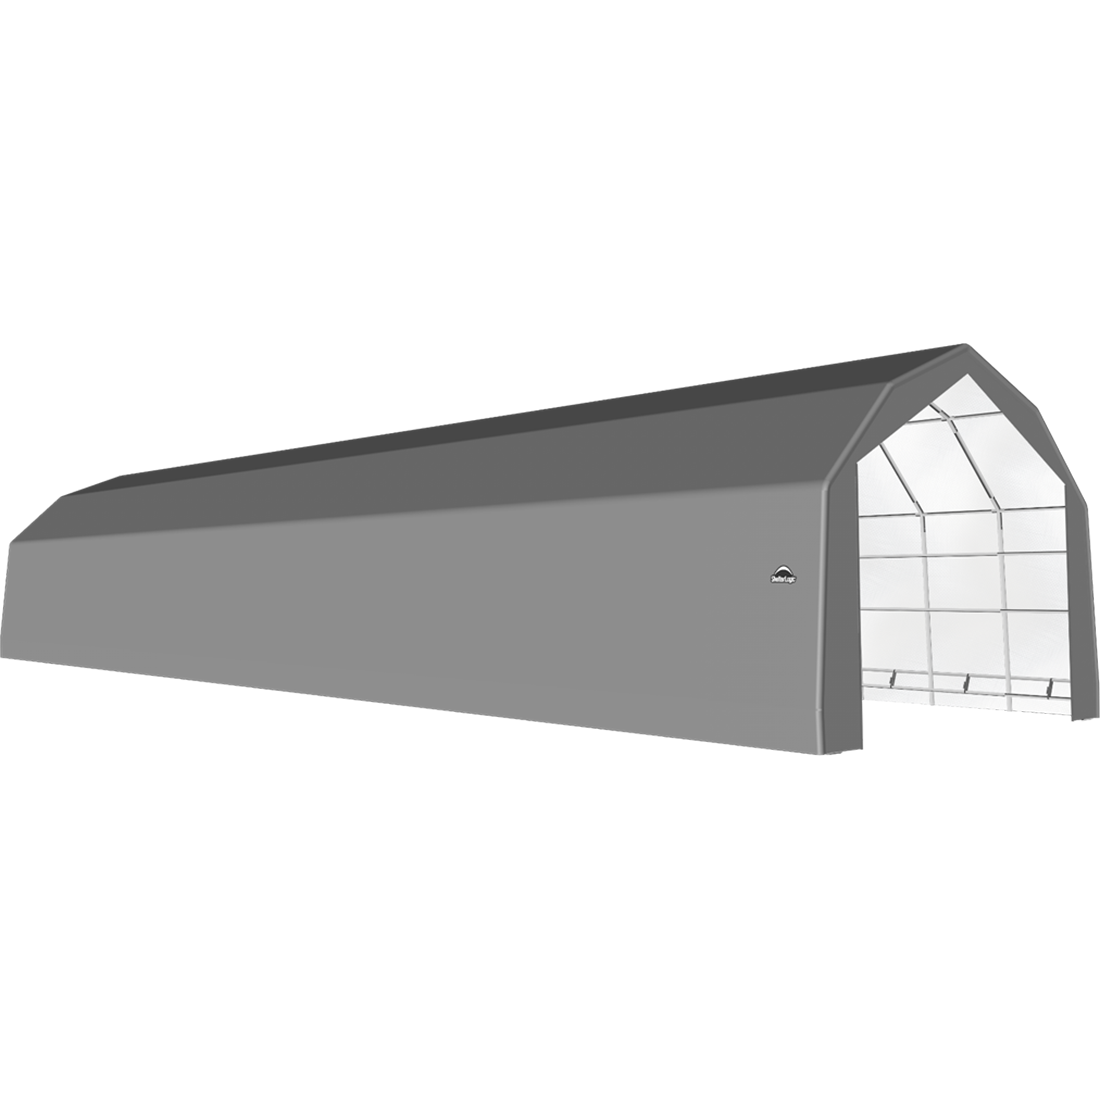 ShelterTech SP Series Barn Shelter, 20 ft. x 76 ft. x 15 ft. Heavy Duty PVC 14.5 oz. Gray